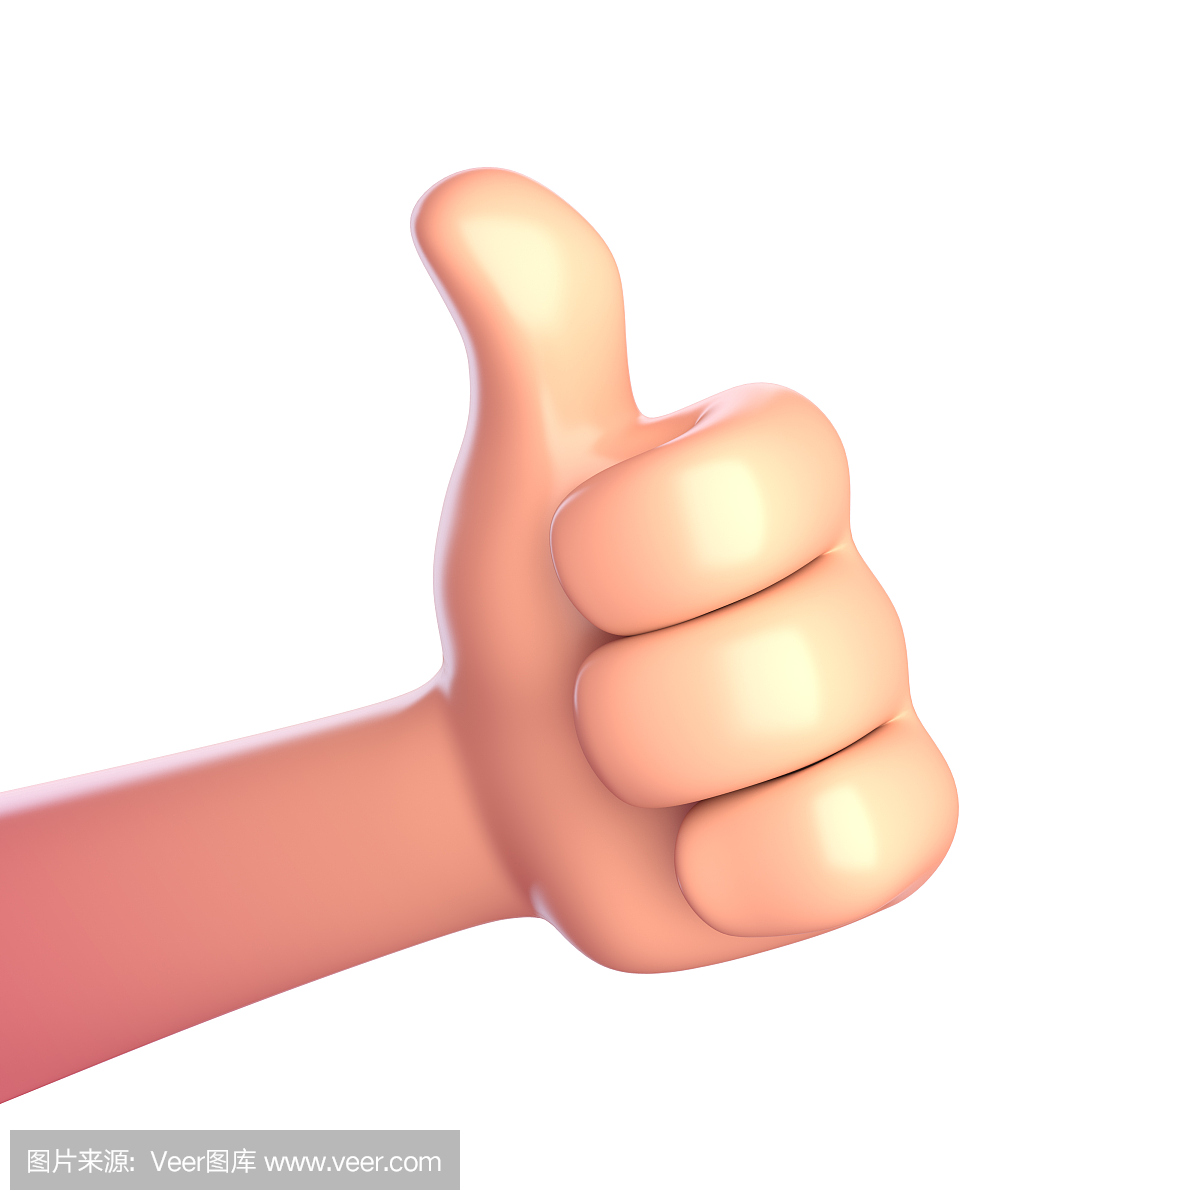 Thumb up cartoon hand. 3d render